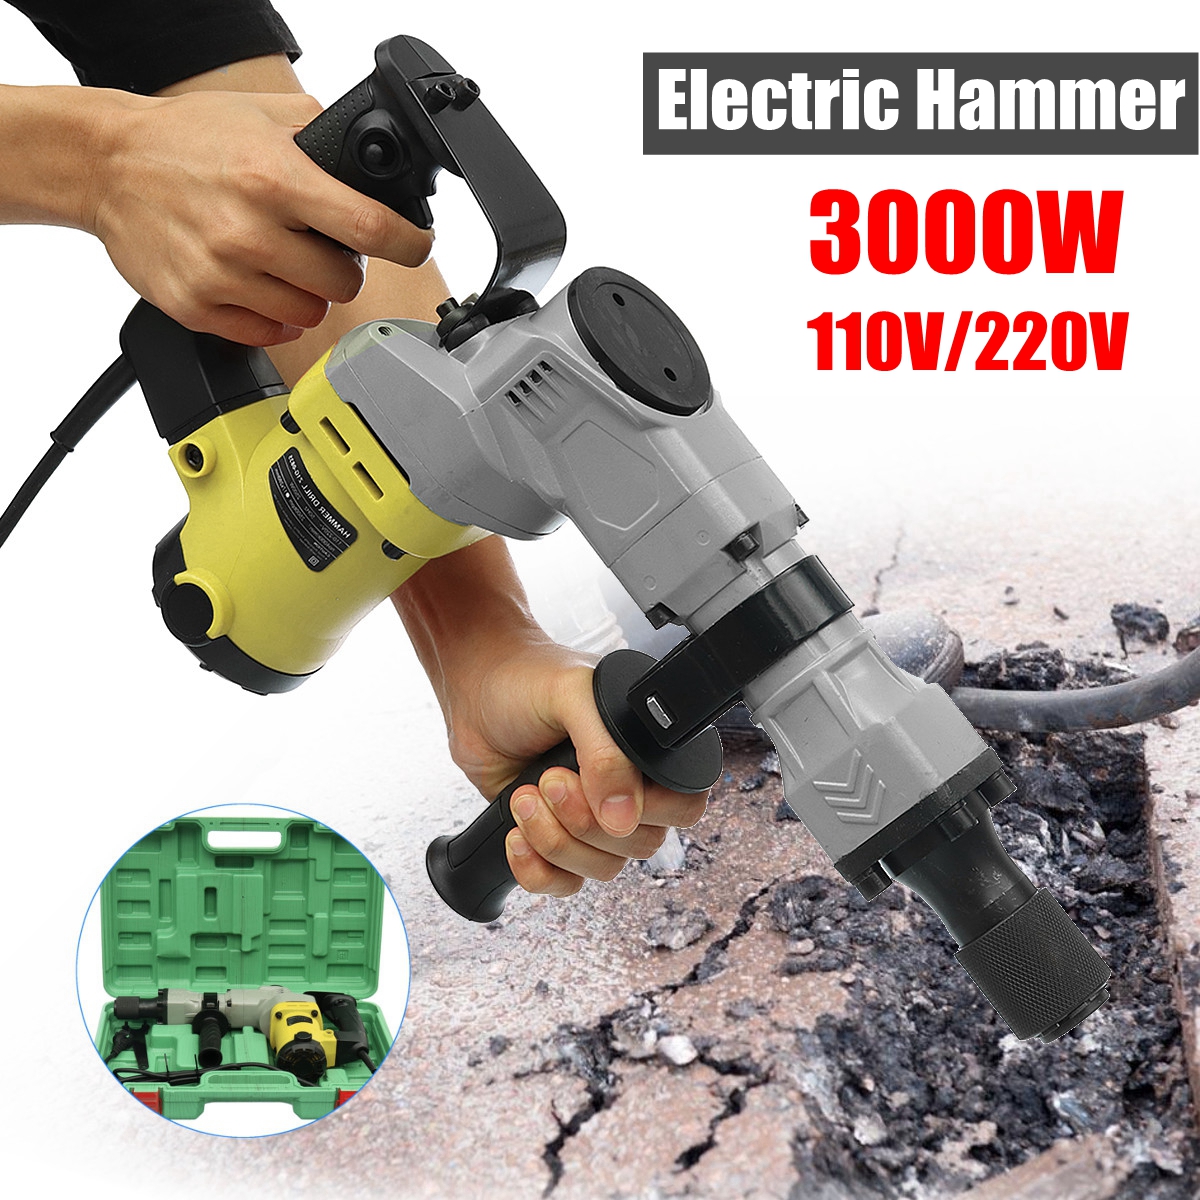 3000W-3000BPM-4500RMin-Electric-Hammer-Demolition-Hammers-Jackhammer-Concrete-Breaker-With-Case-1300390-3